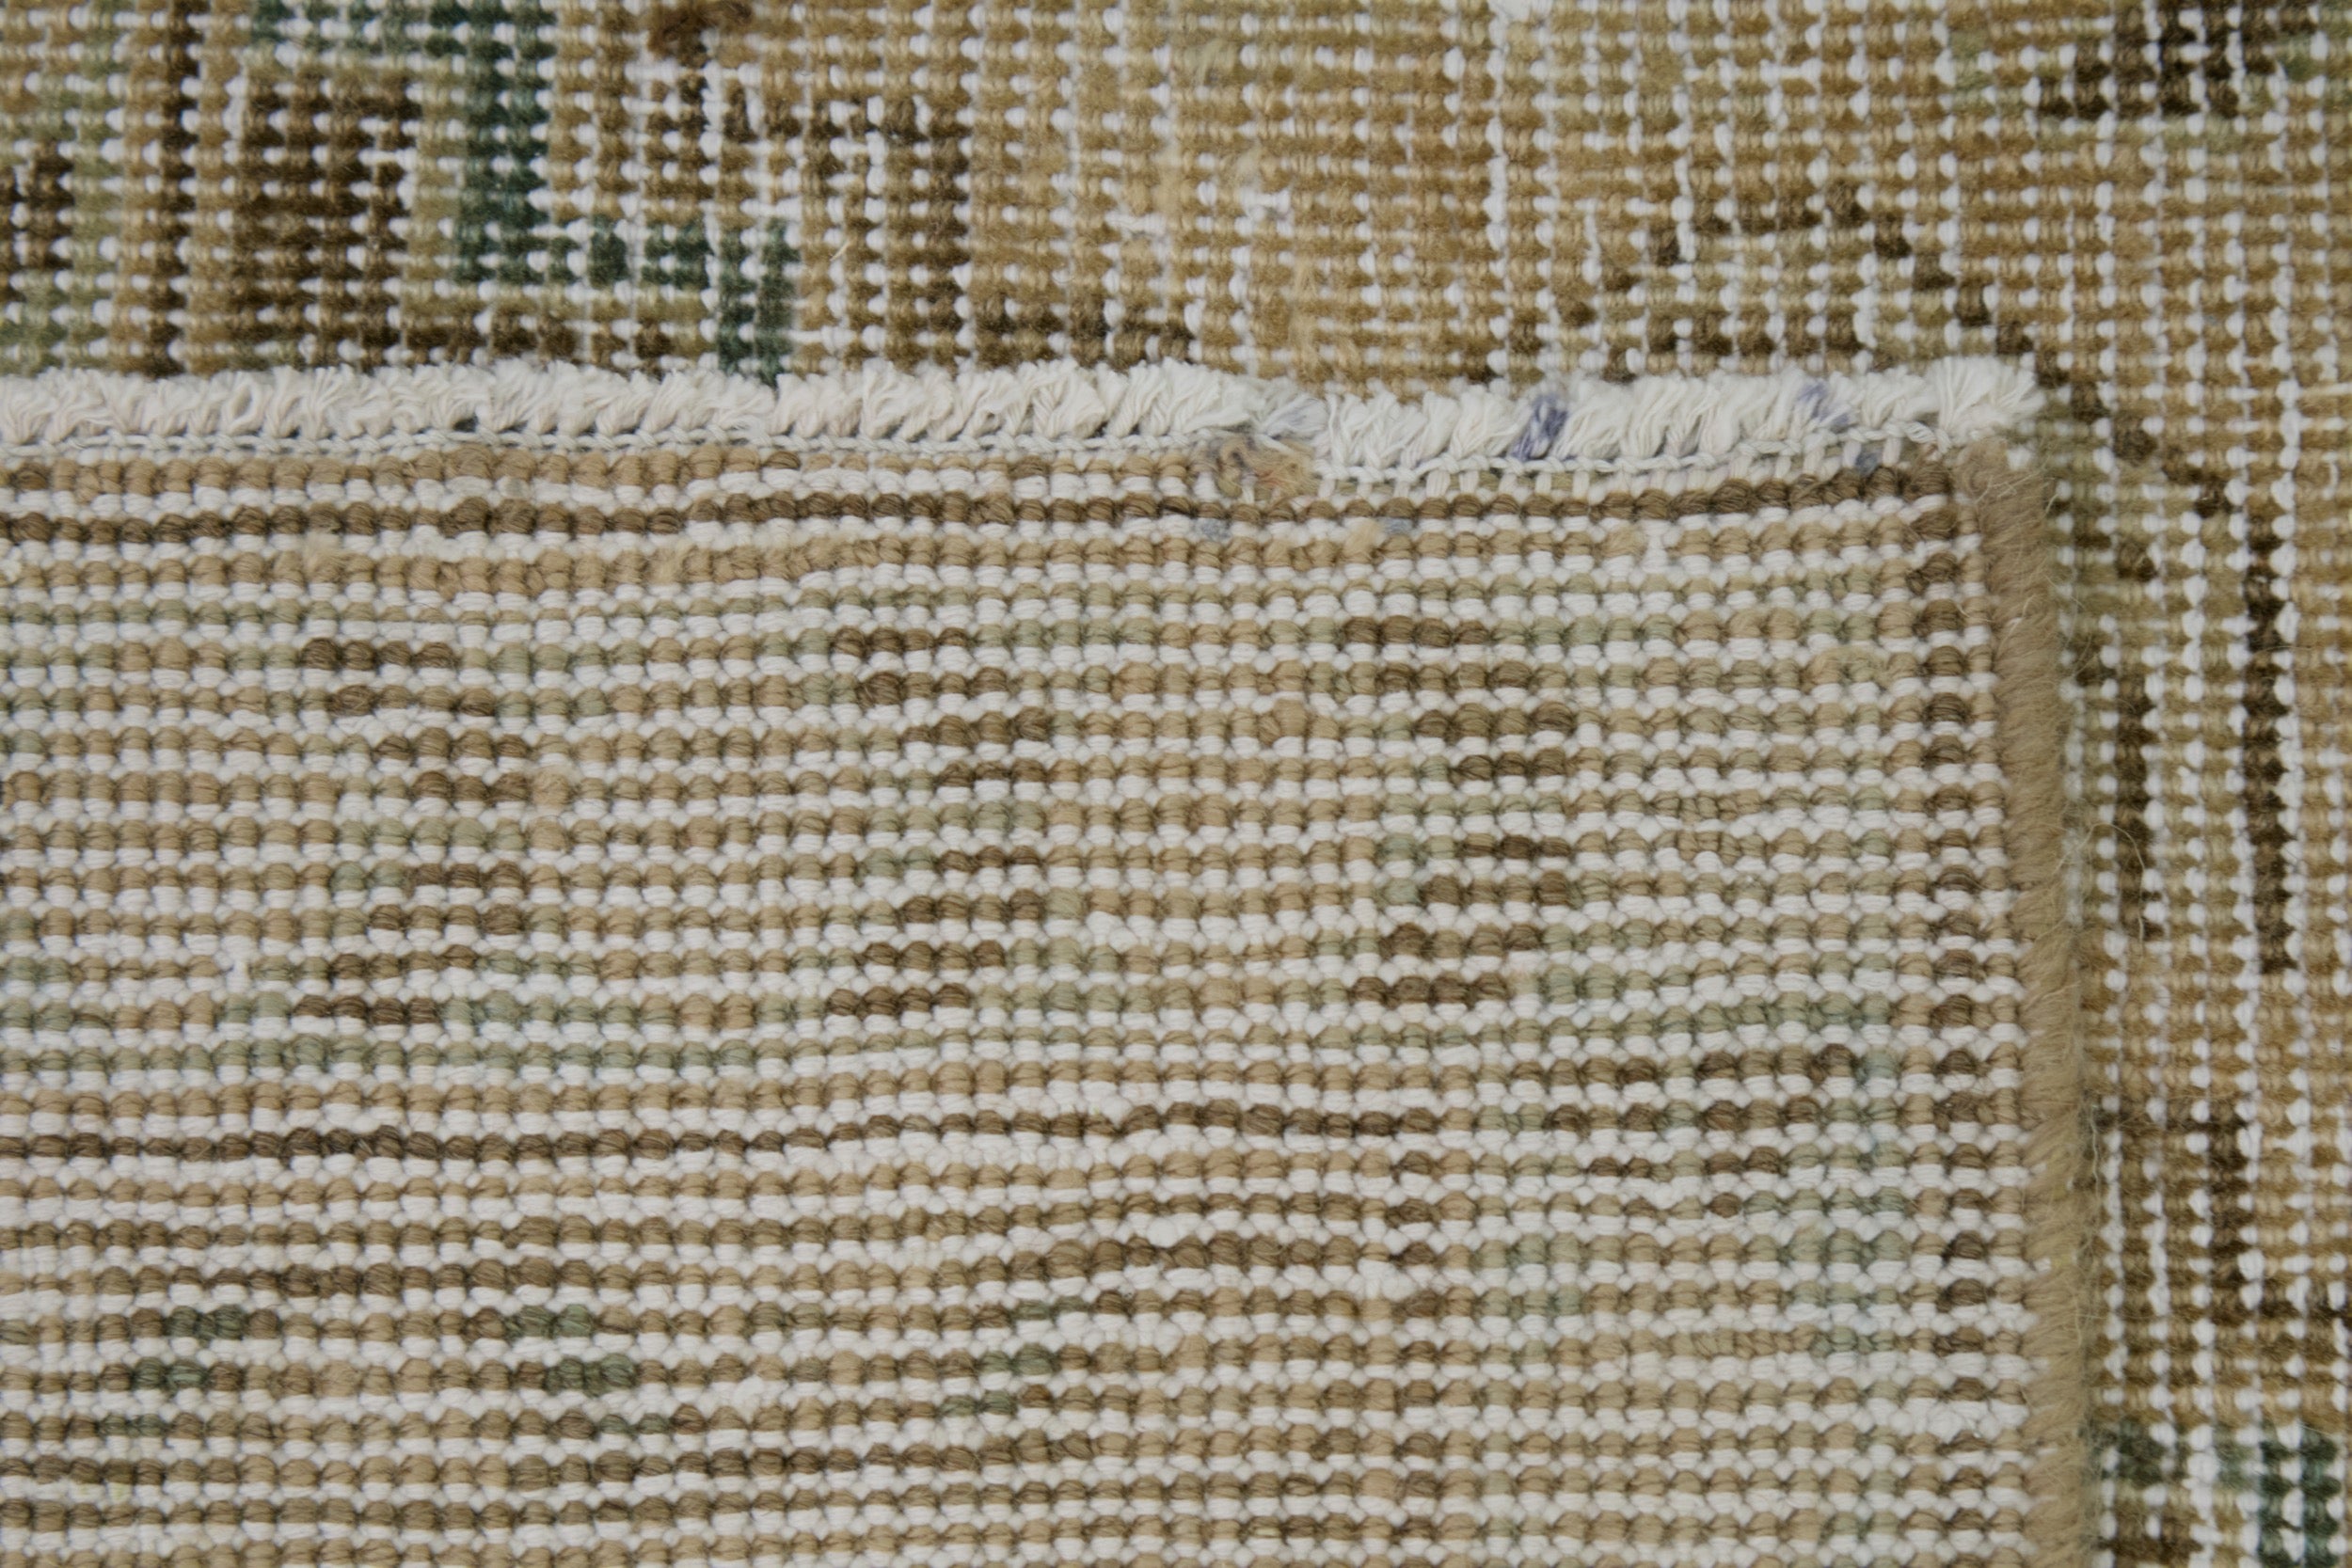 The Artisanal Depth of Sharlene - Wool and Cotton Blend | Kuden Rugs